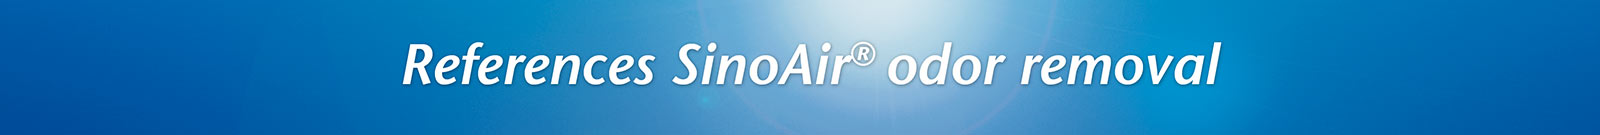 References SinoAir odor removal